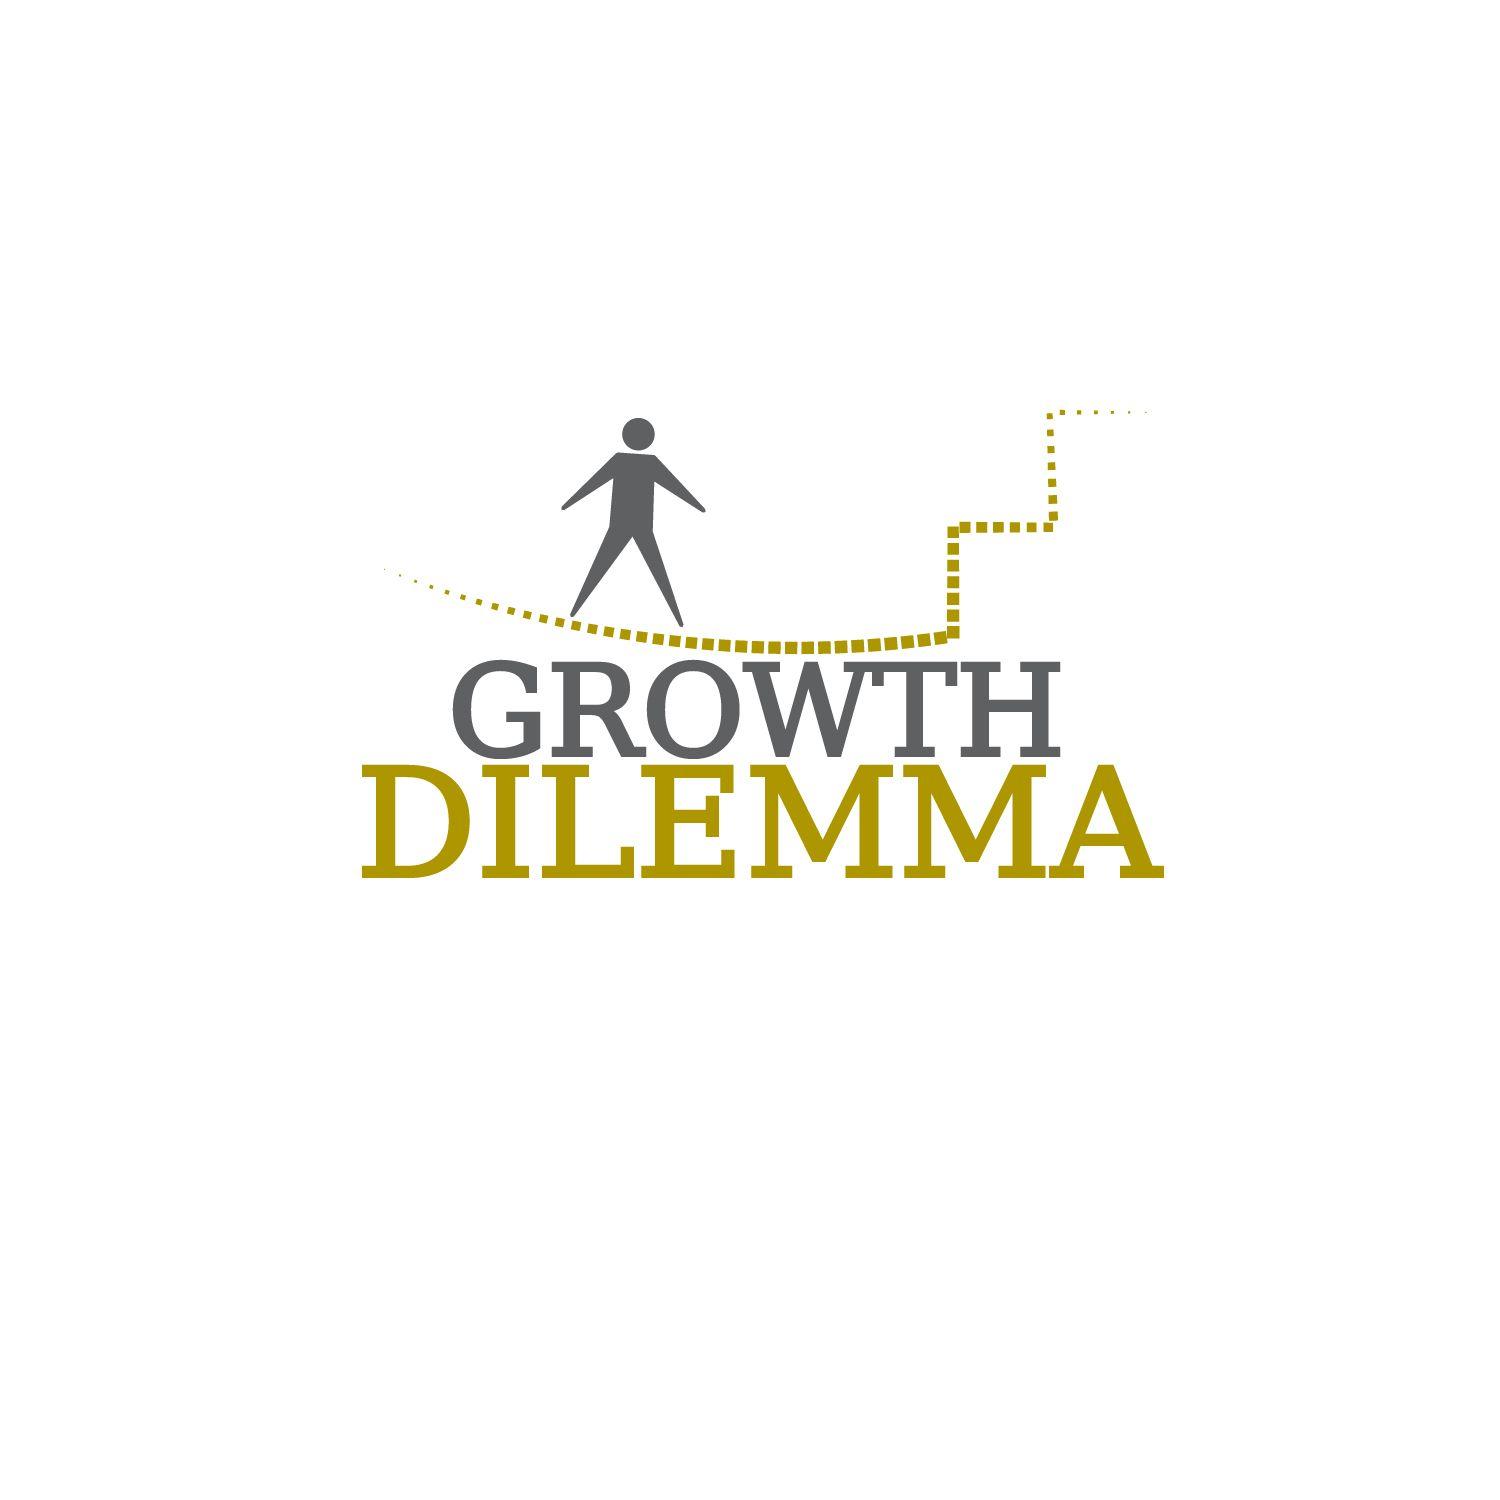 Dilemma Logo - Serious, Conservative, Entrepreneur Logo Design for Growth Dilemma ...